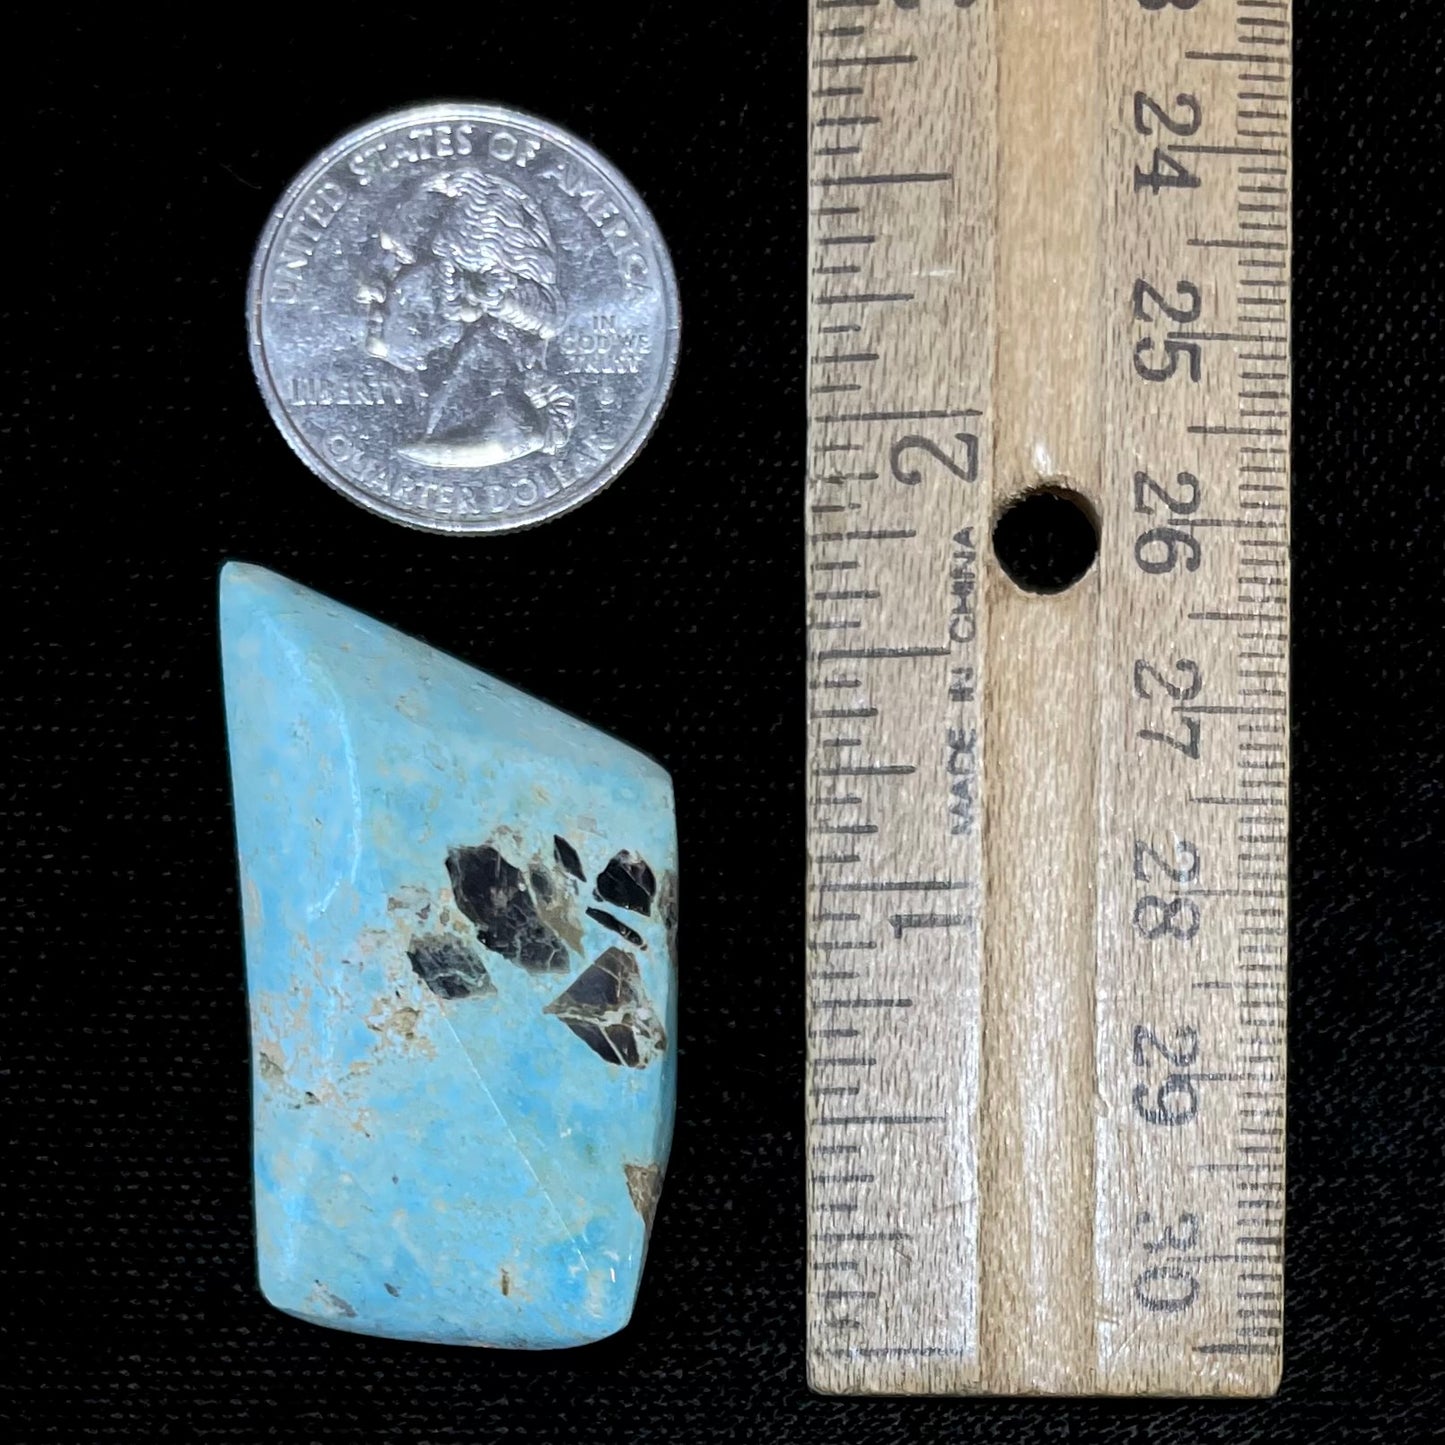 Polished baby blue turquoise specimen from Baja California, Mexico.